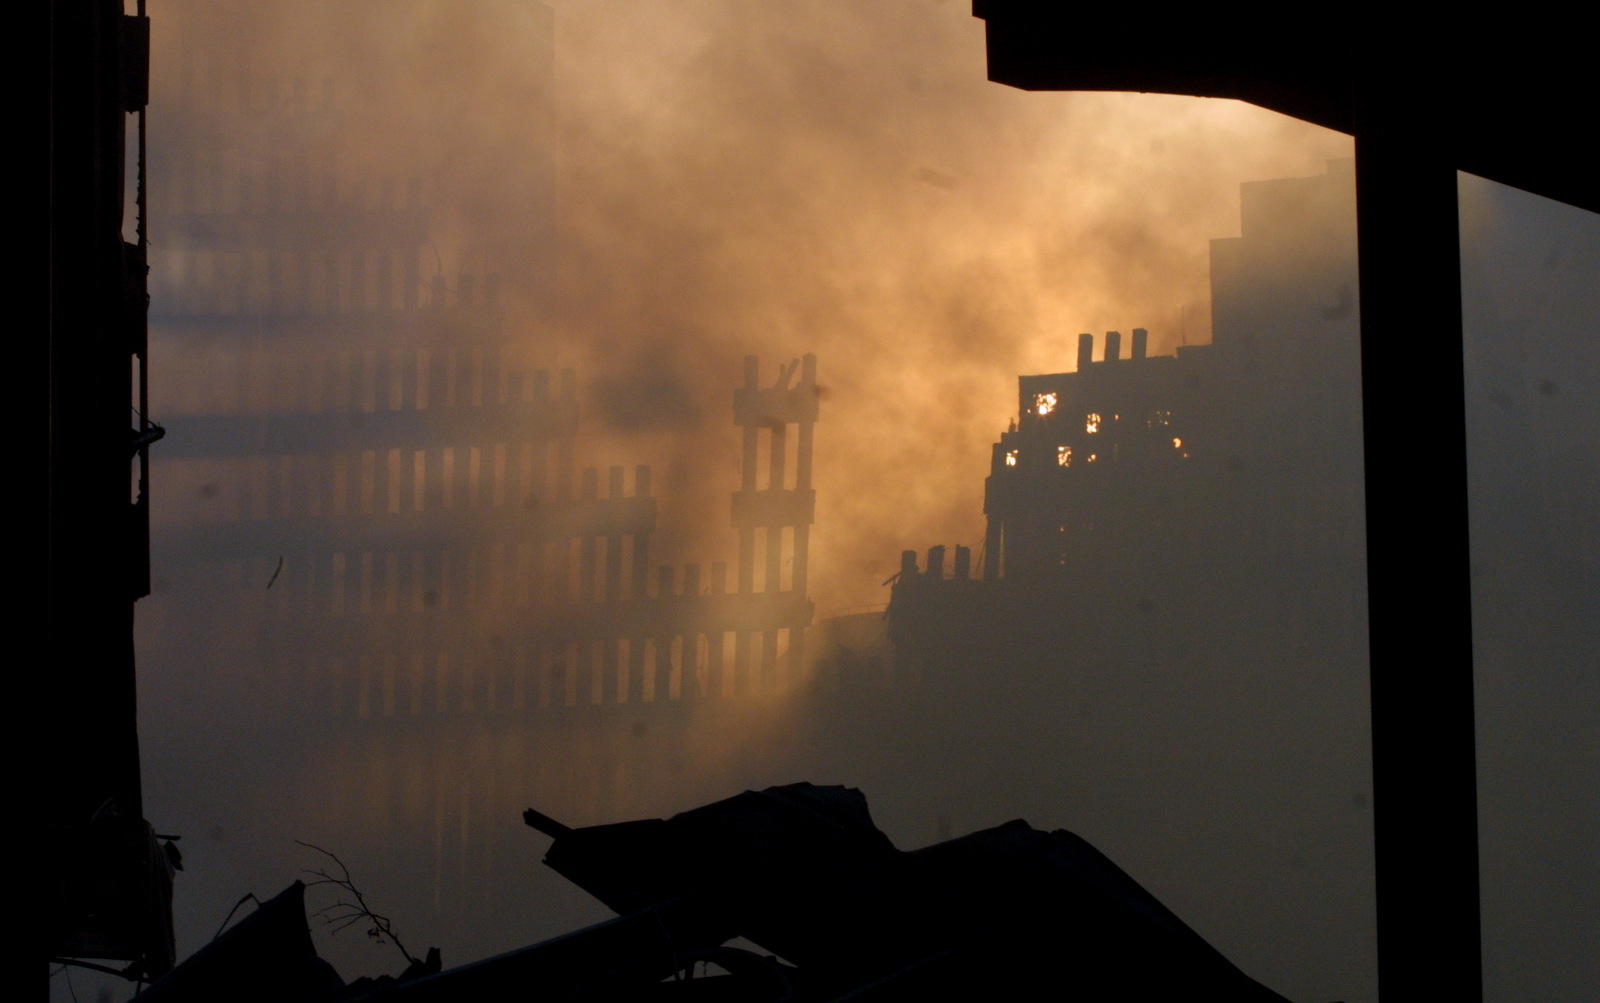 Light is seen through the debris at ground zero on September 12, 2001 after the September 11 terrorist attacks.(AP/Baldwin)